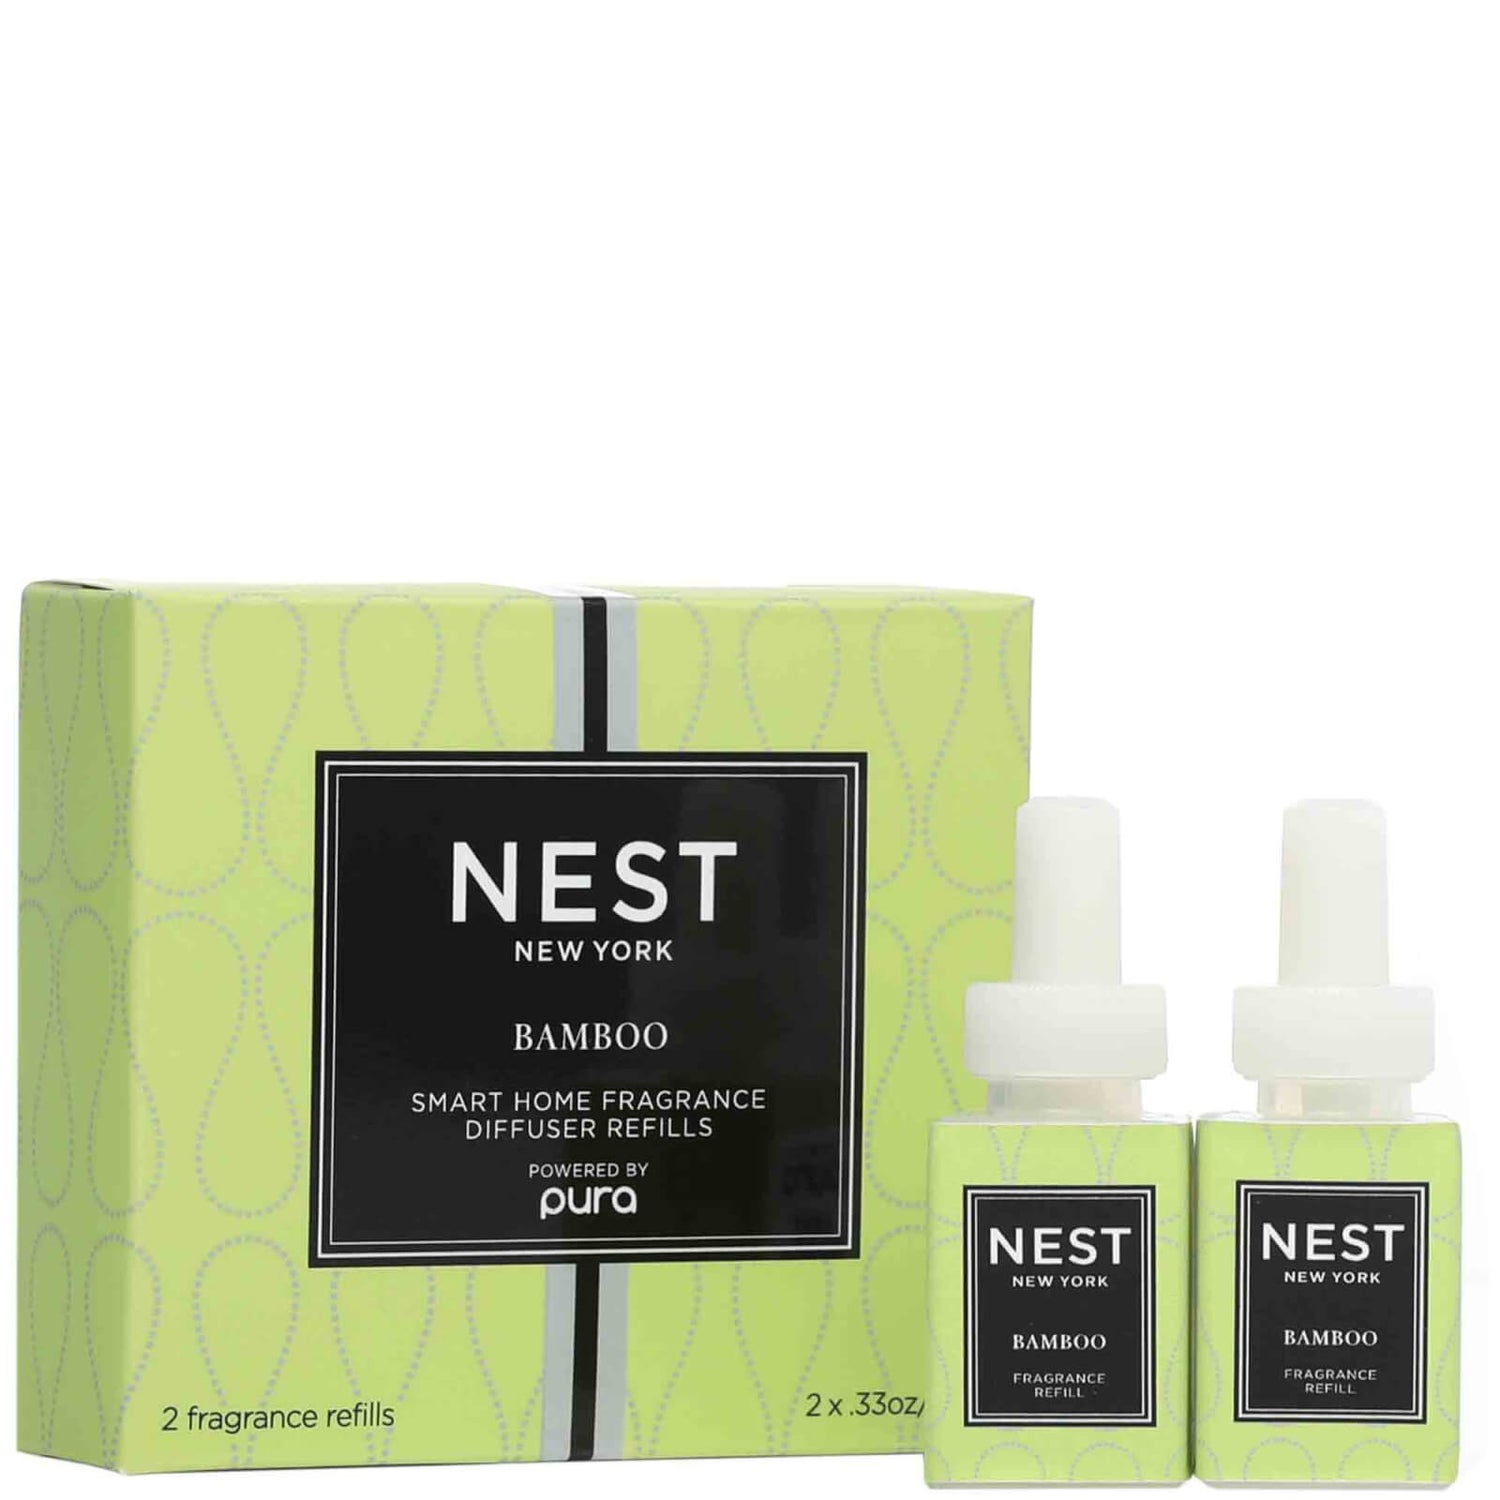 NEST New York Bamboo Refill Duo for NEST x Pura Smart Home Fragrance Diffuser 10ml